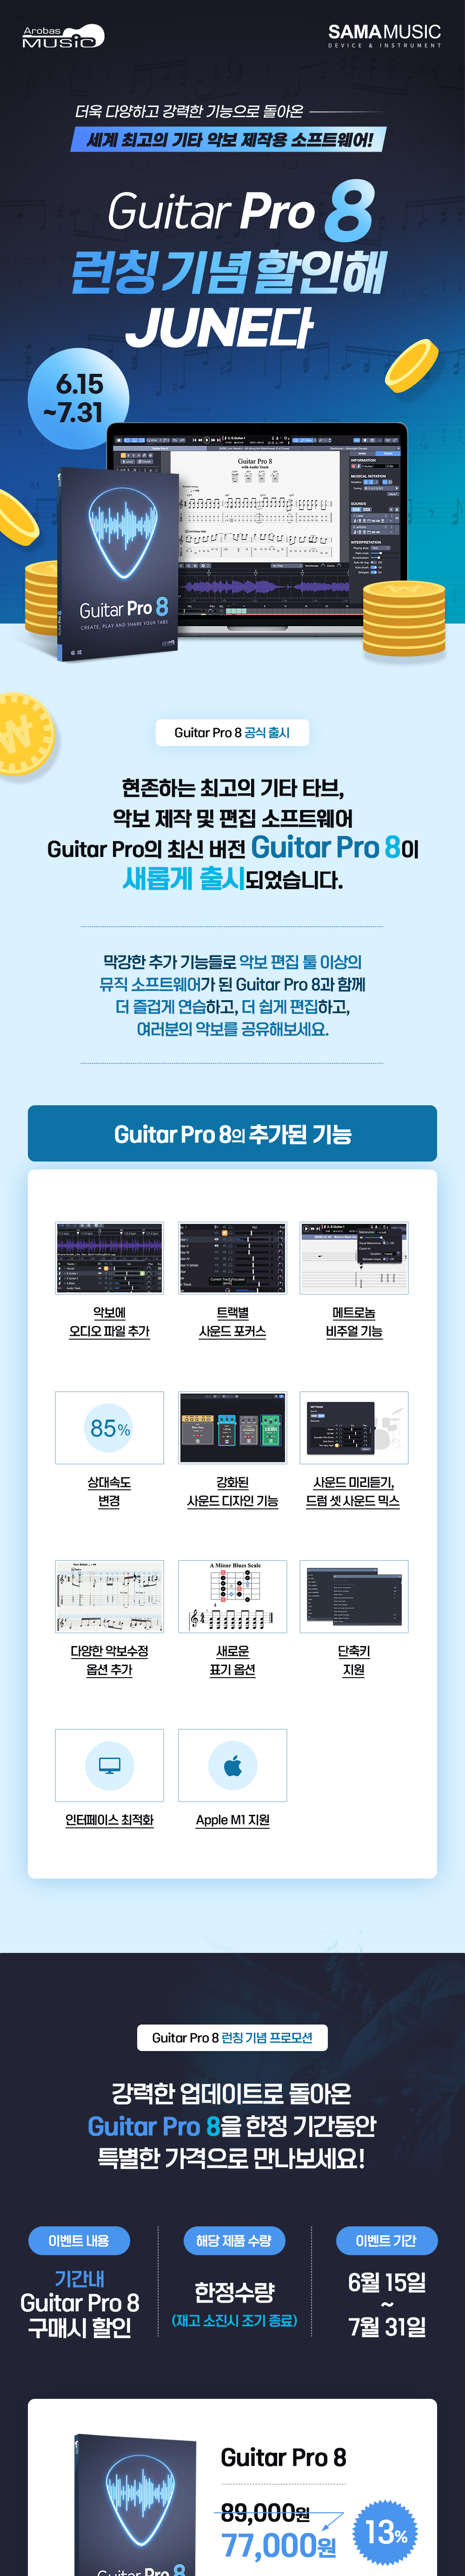 Guitar Pro 8 런칭 이벤트 안내